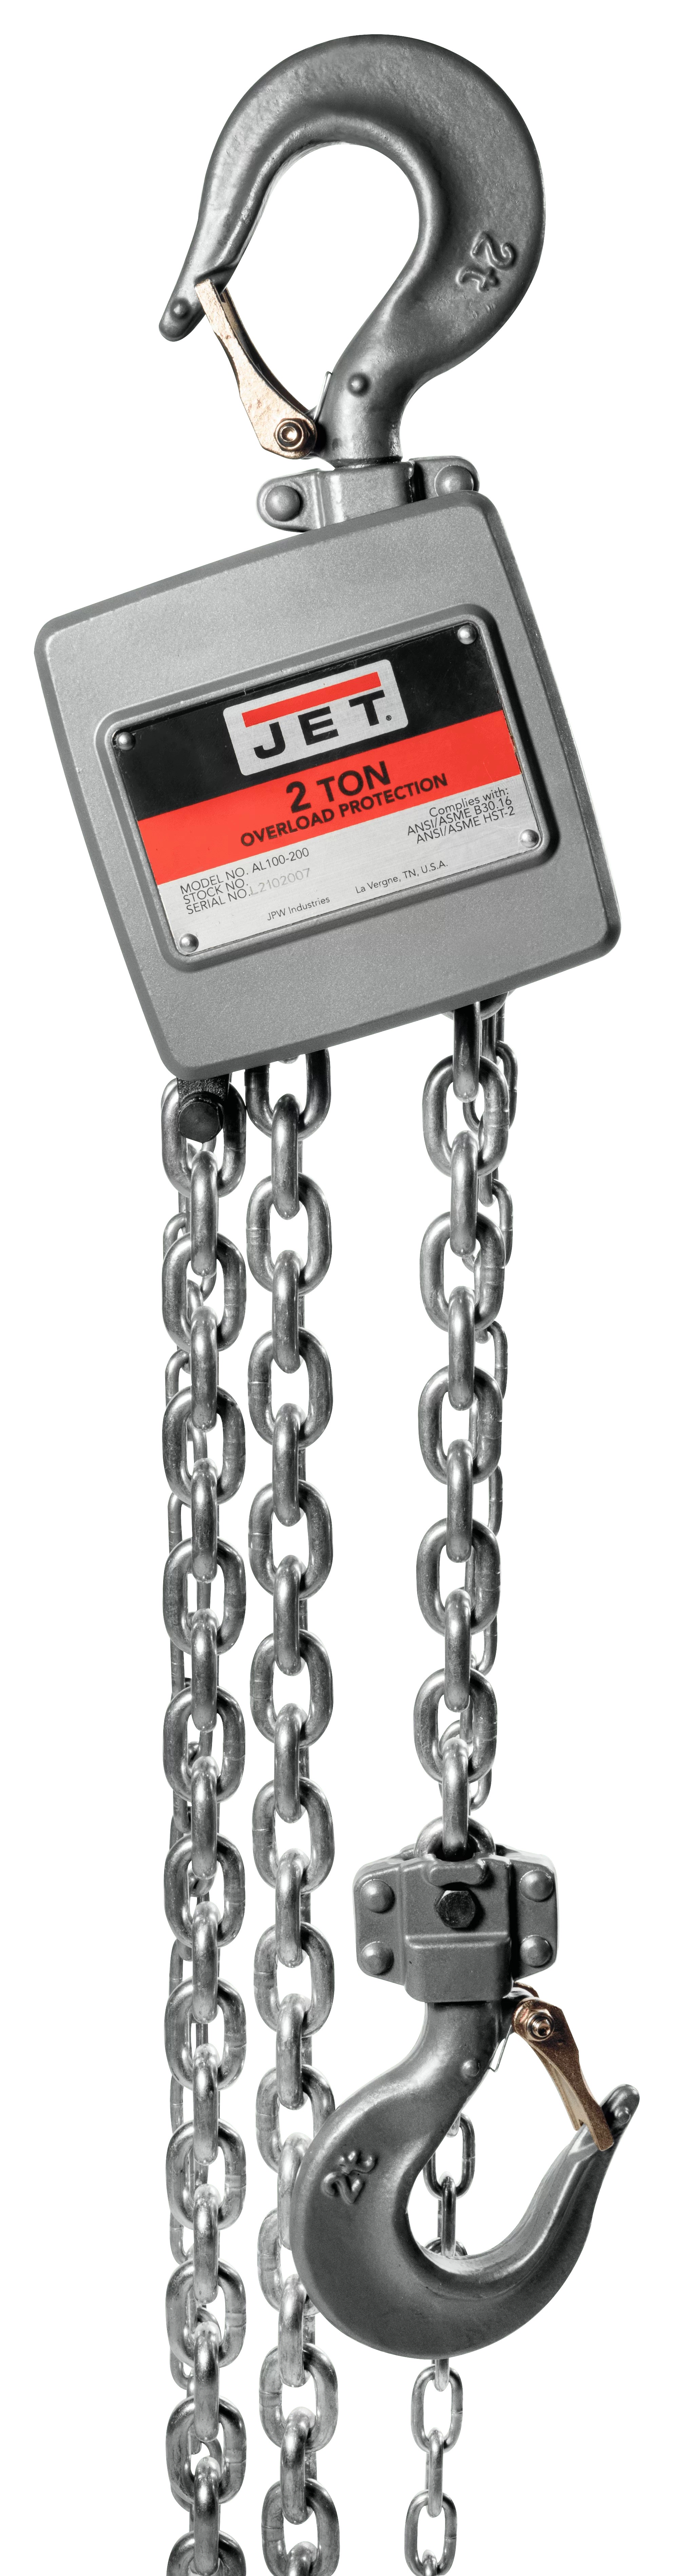 AL100-200-20 2 Ton Aluminum Hand Chain Hoist with 20ft of Lift